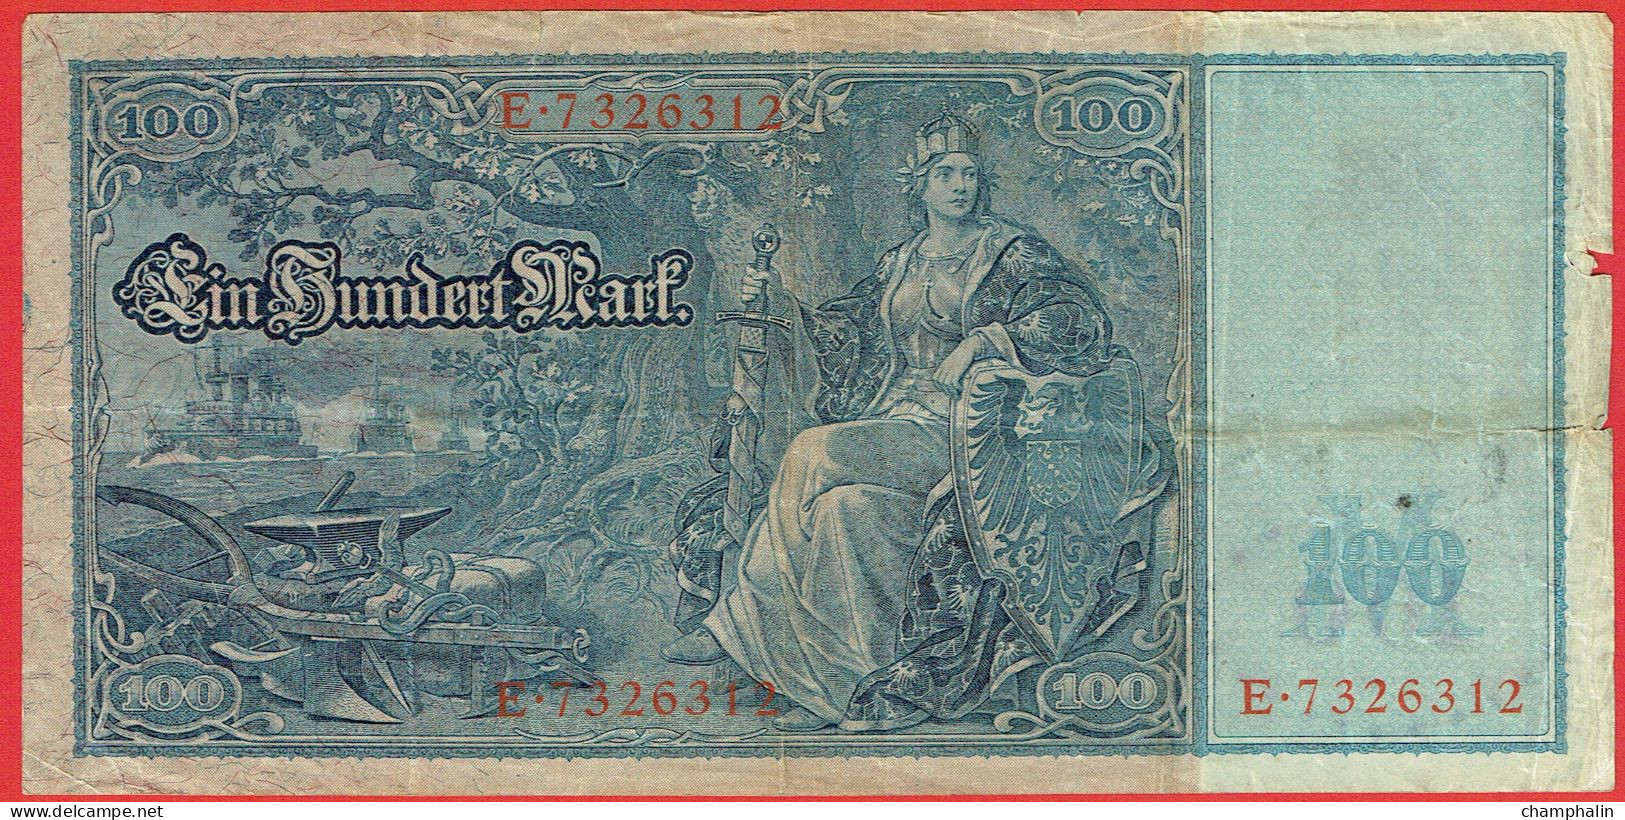 Allemagne - Billet De 100 Mark - 21 Avril 1910 - Sceau Rouge - P42 - 100 Mark